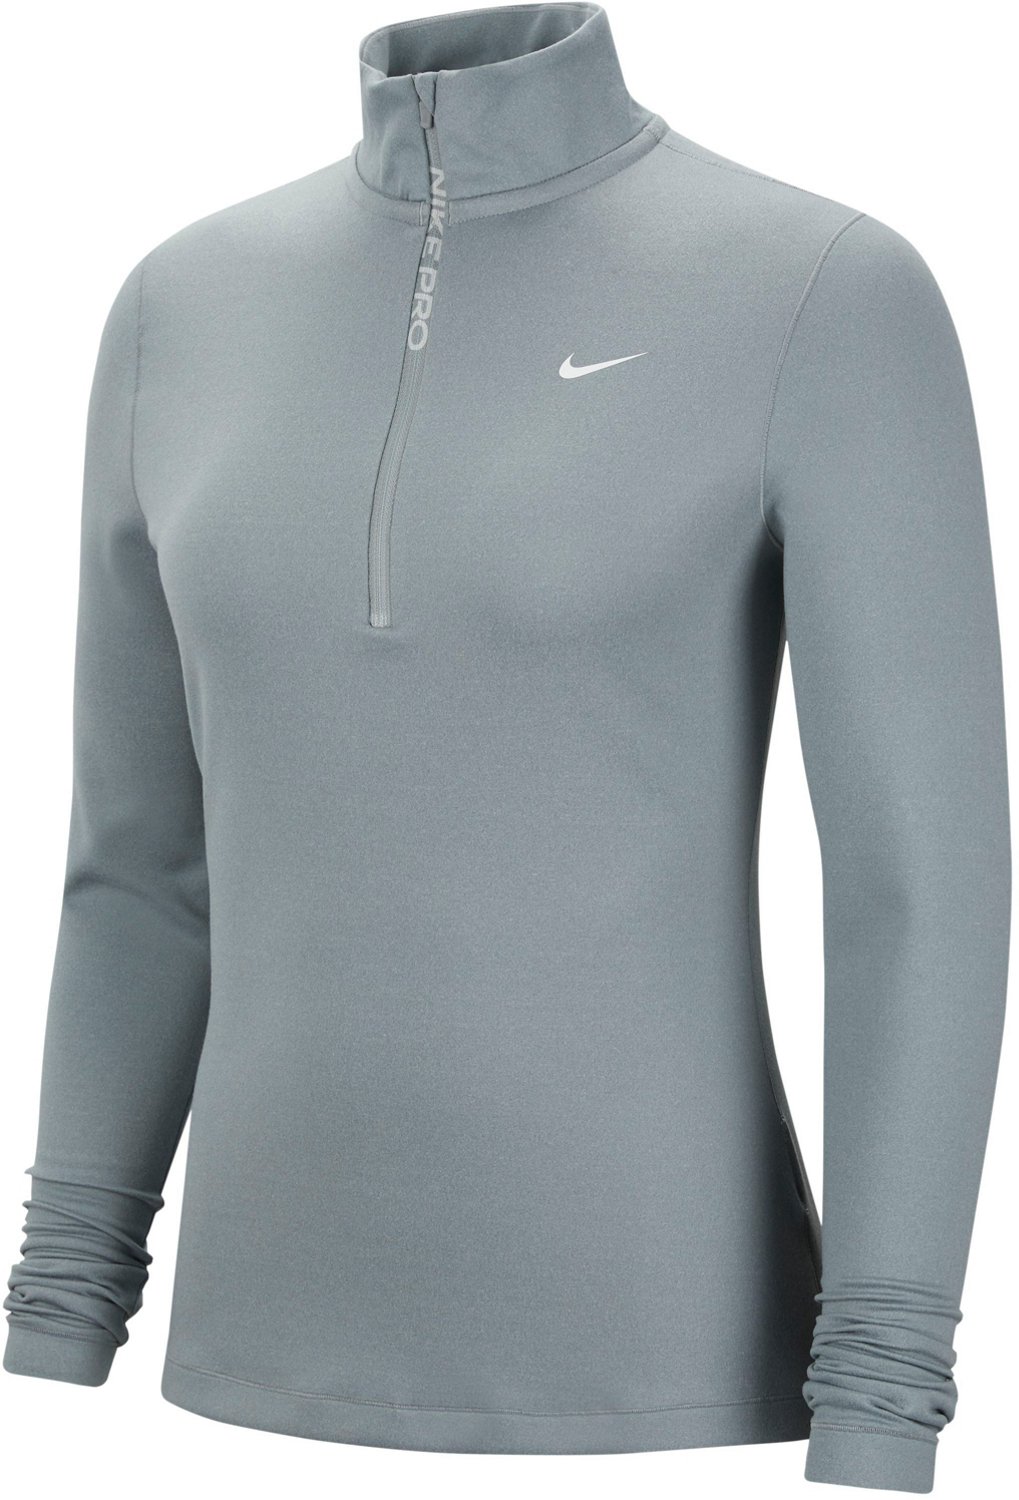 Nike Women's Nike Pro Therma 1/2 Zip Long Sleeve Performance Top | Academy